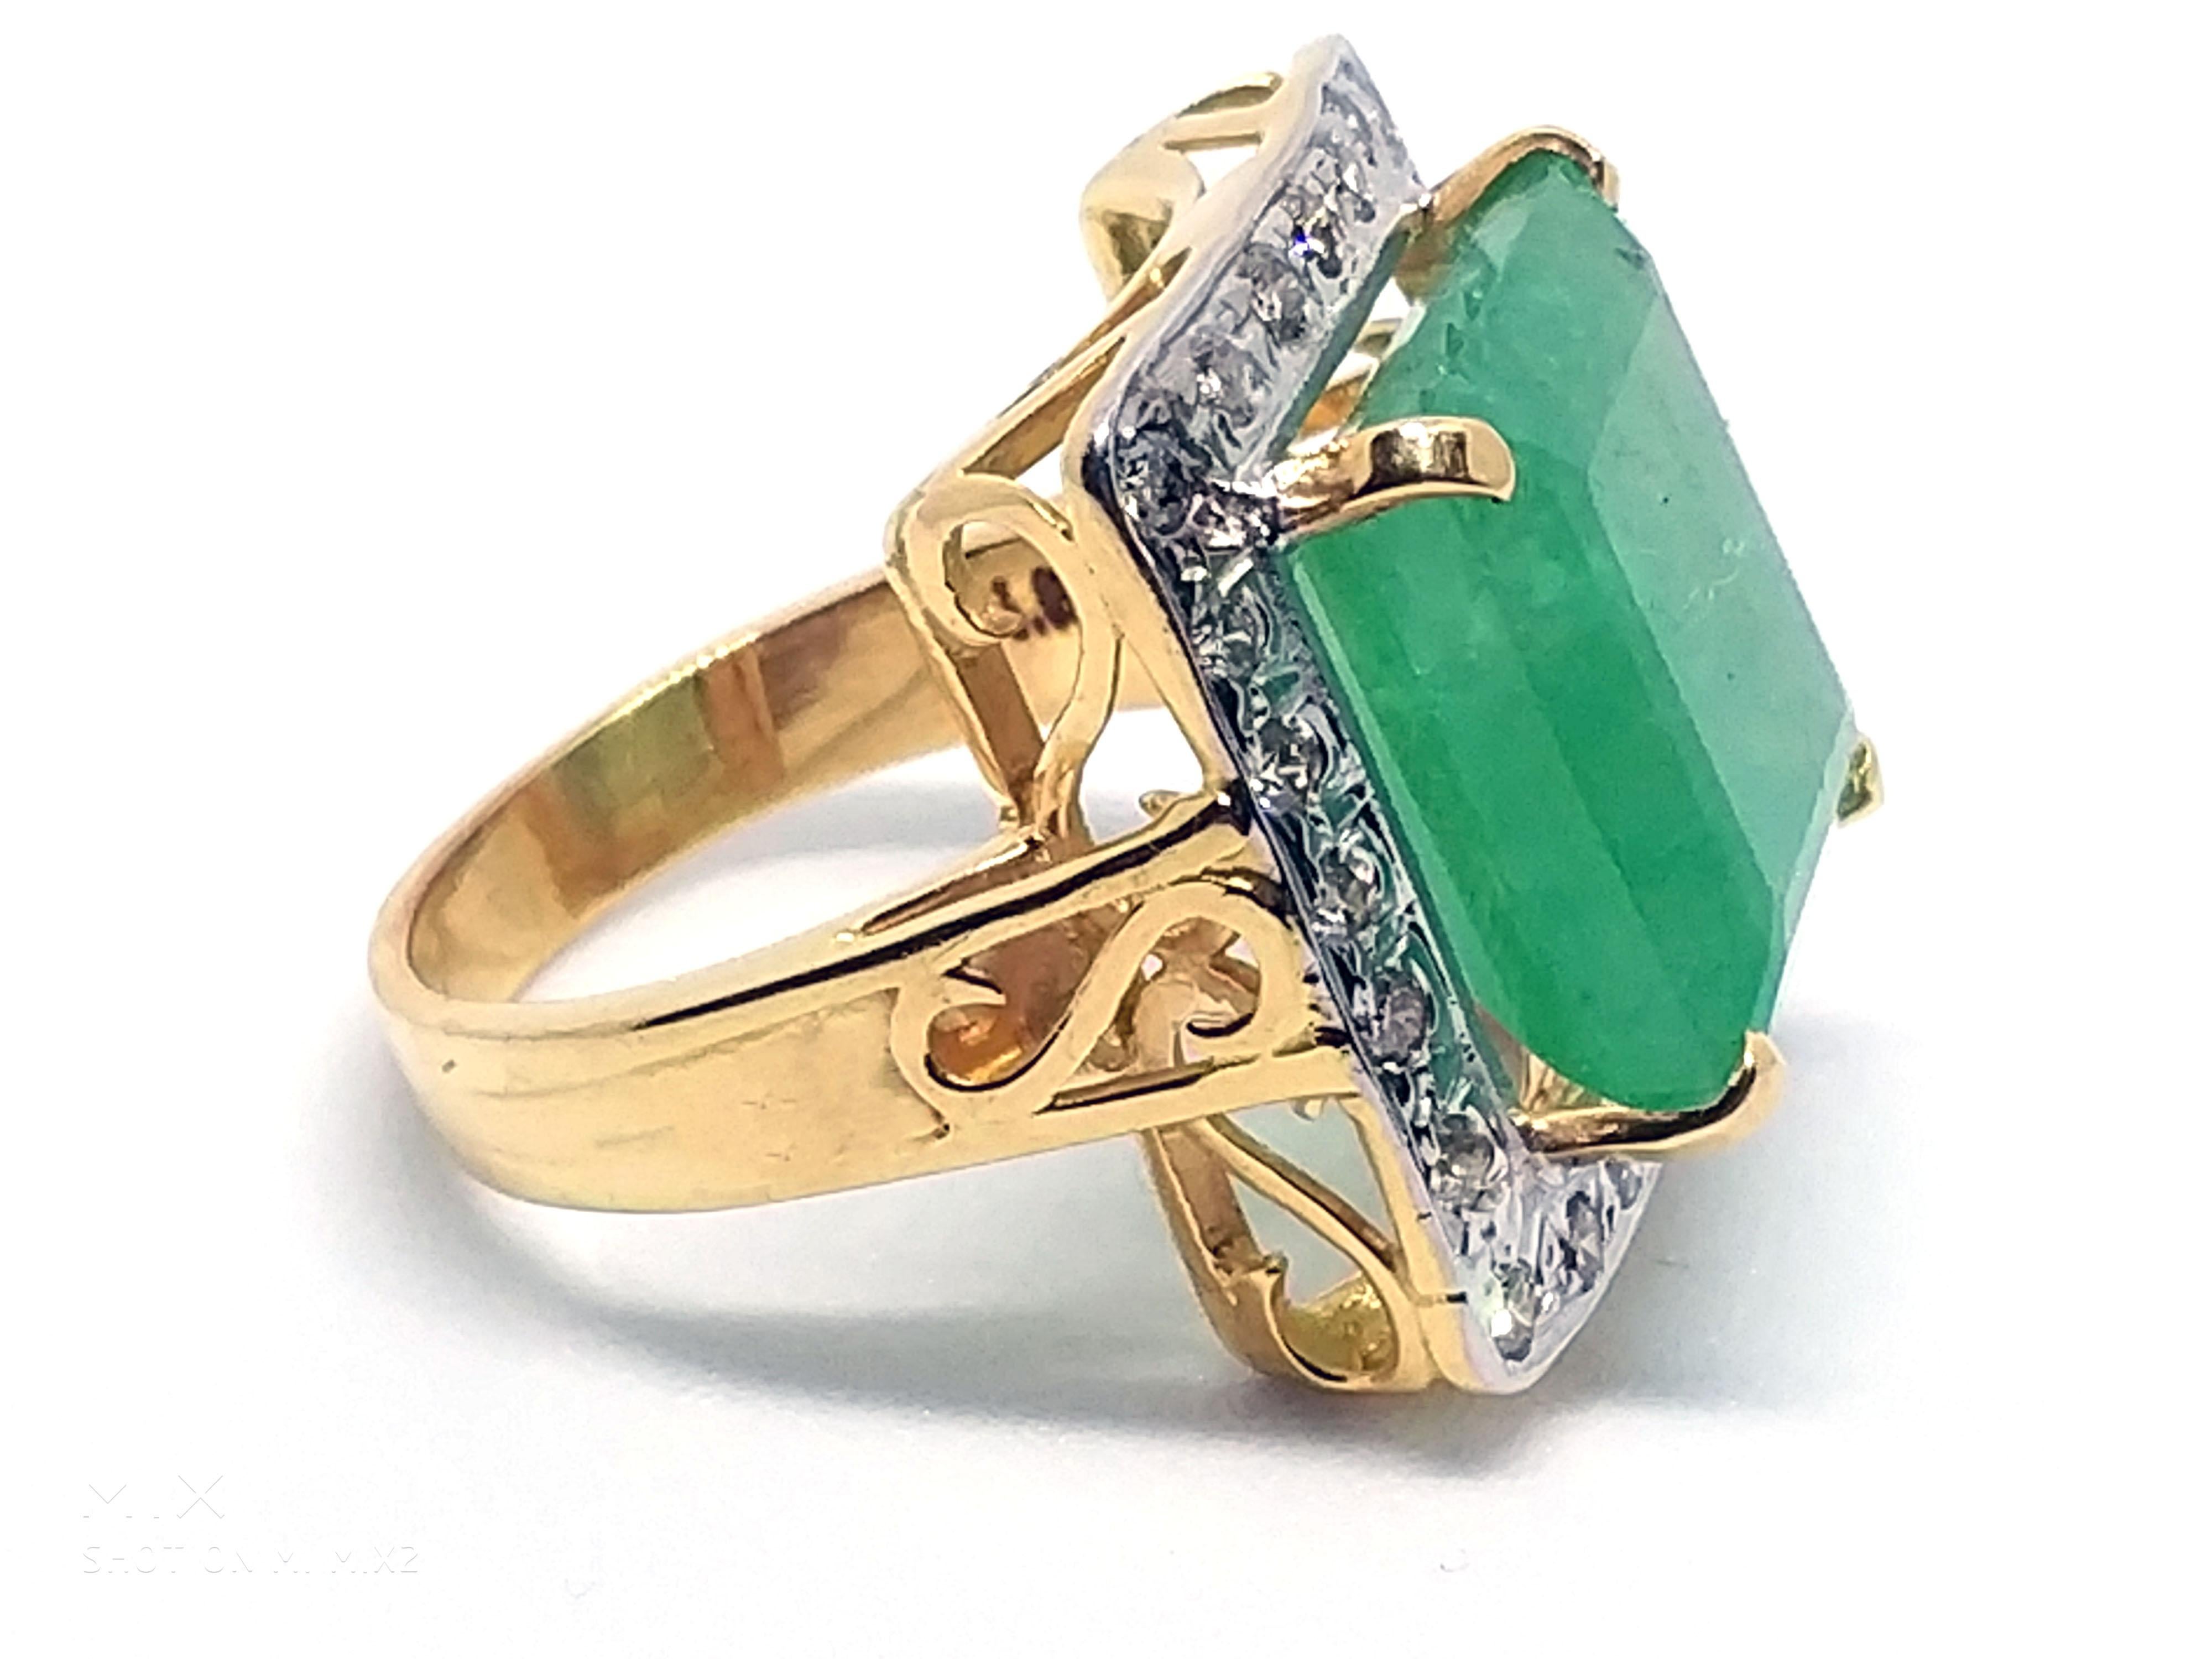 13.21 carat certified emerald and
1 carat diamond
in 18 carat yellow gold